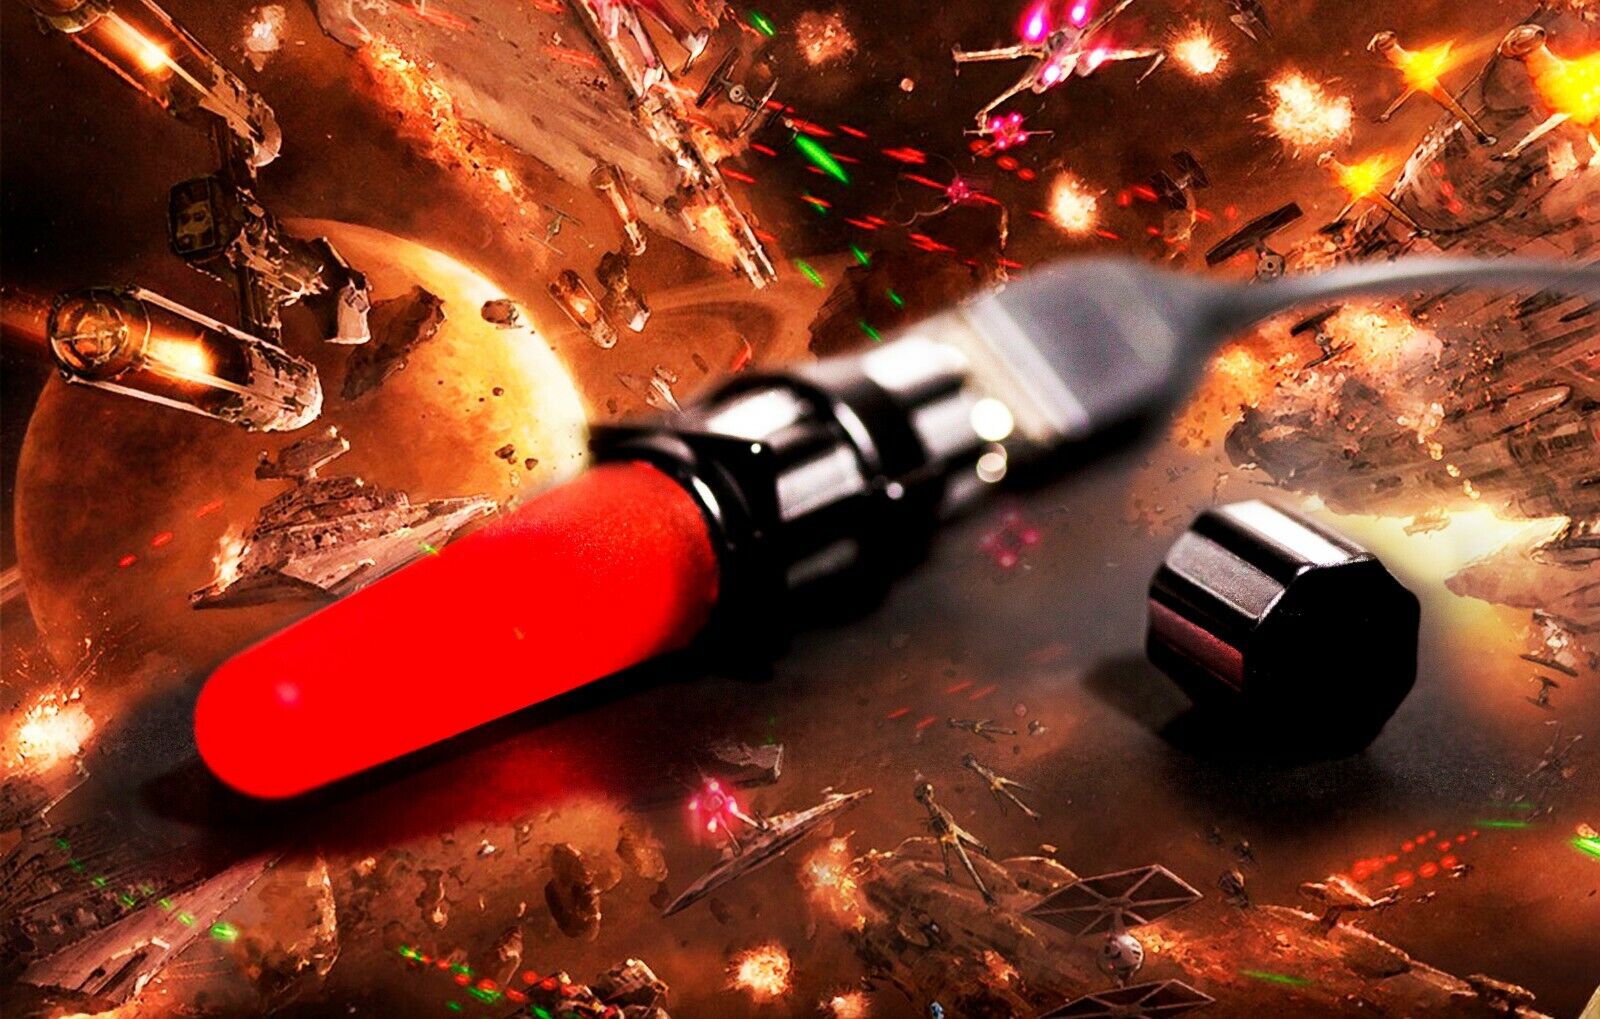 LightSaber Design Star Wars Theme USB 2.0 Flash Drive 16gb